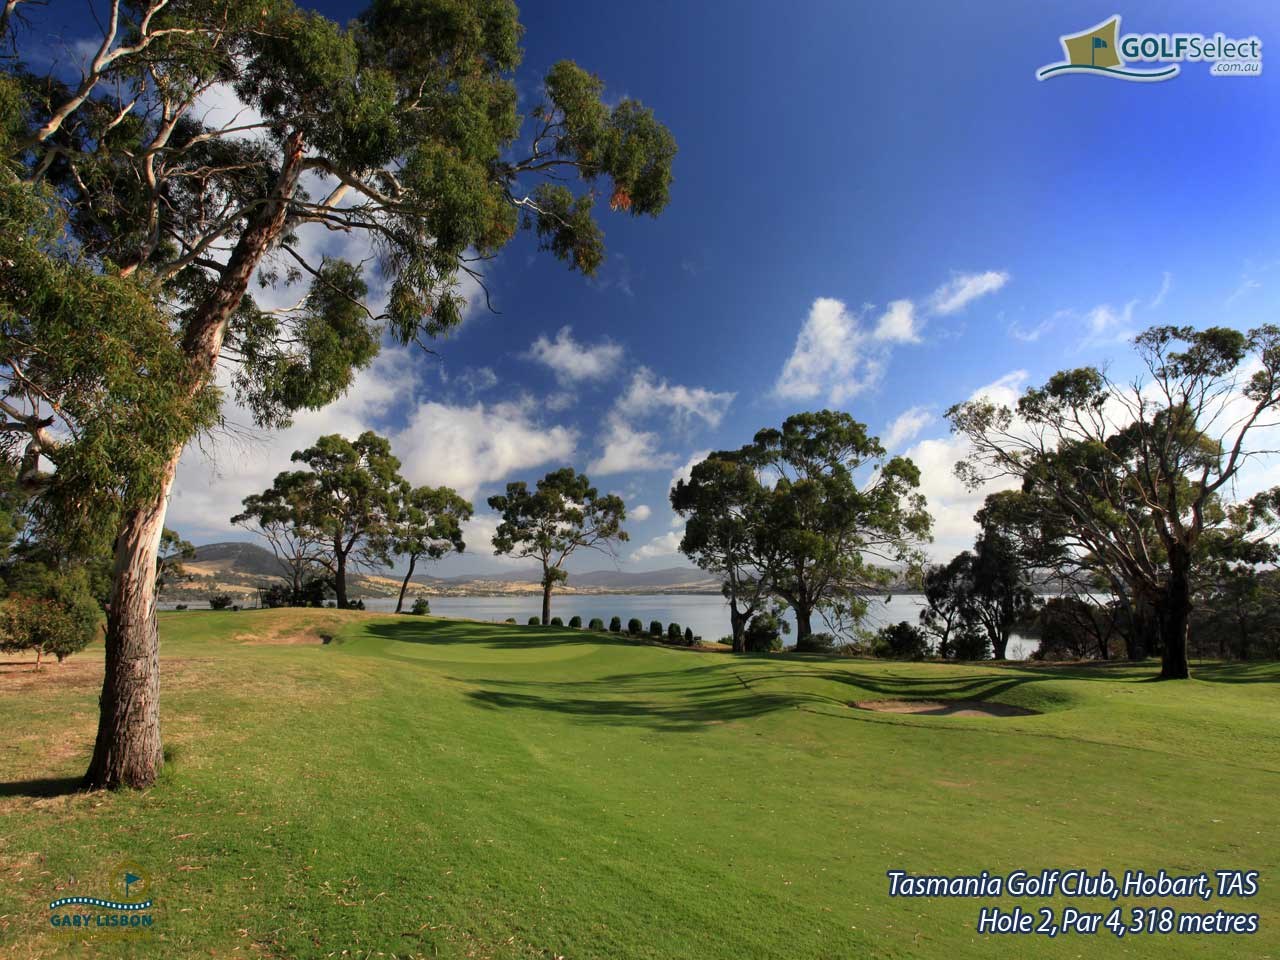 Tasmania Golf Club Hole 2, Par 4, 318 metres